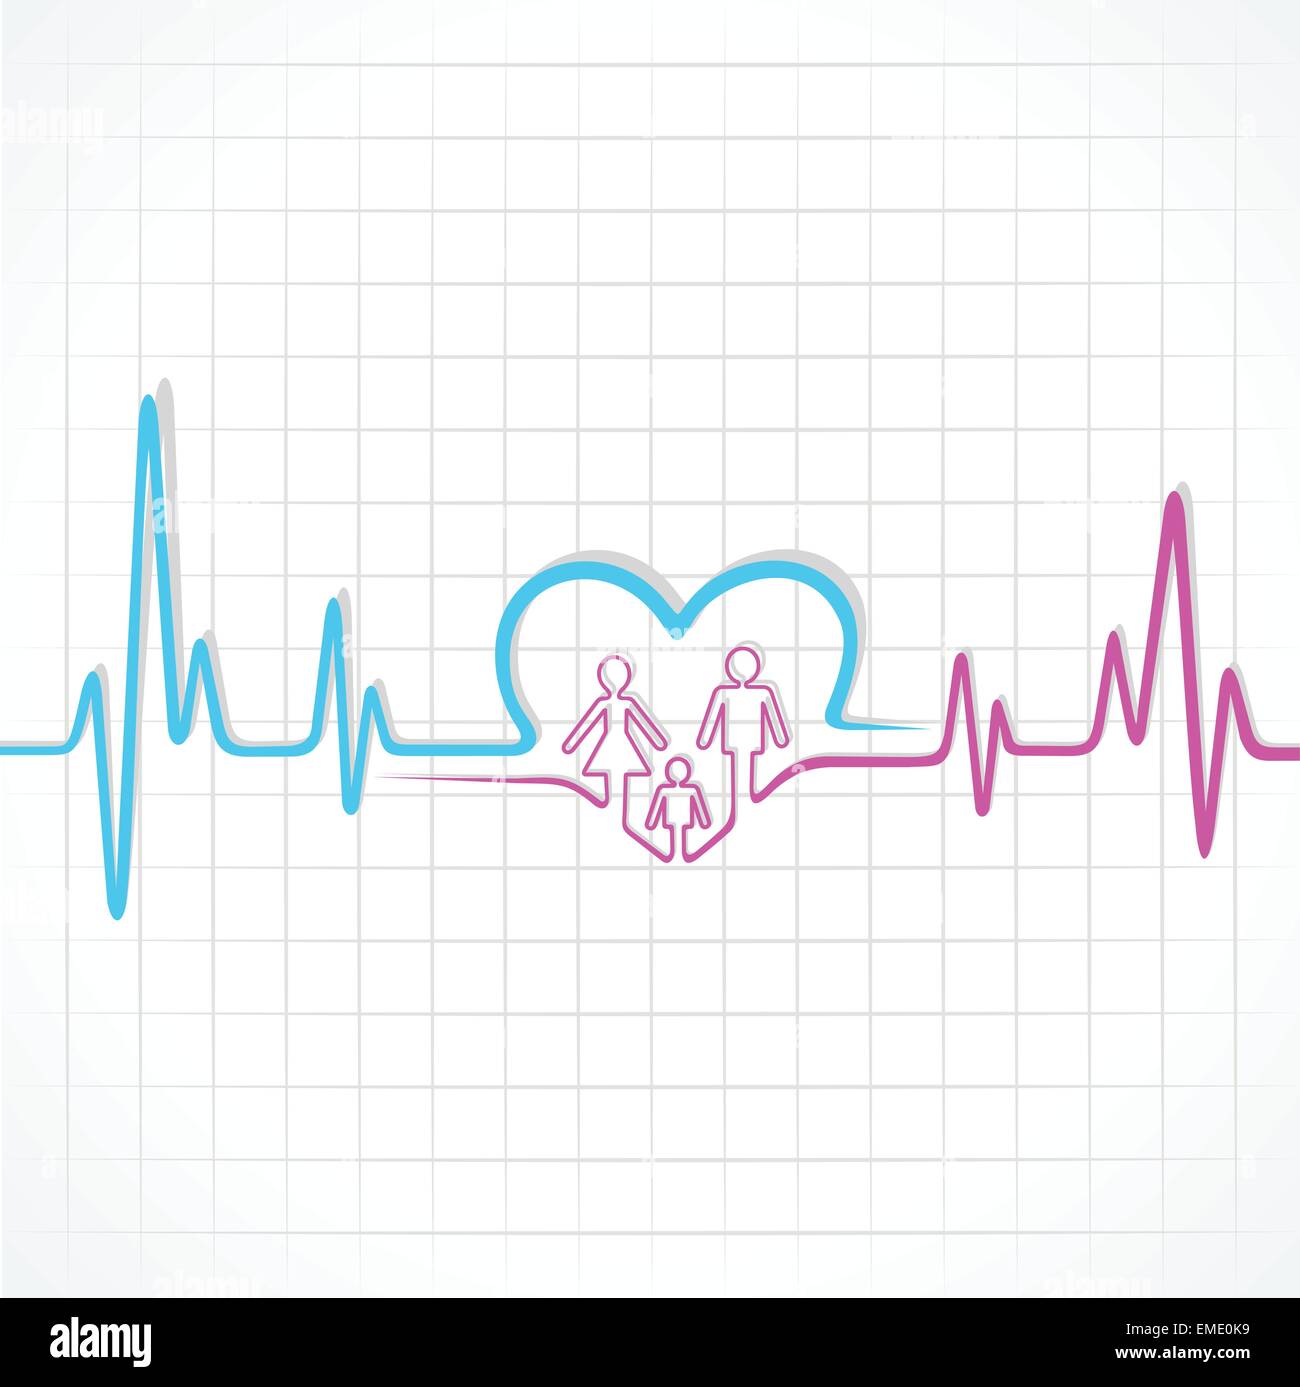 Heartbeat make family and heart symbol Stock Vector